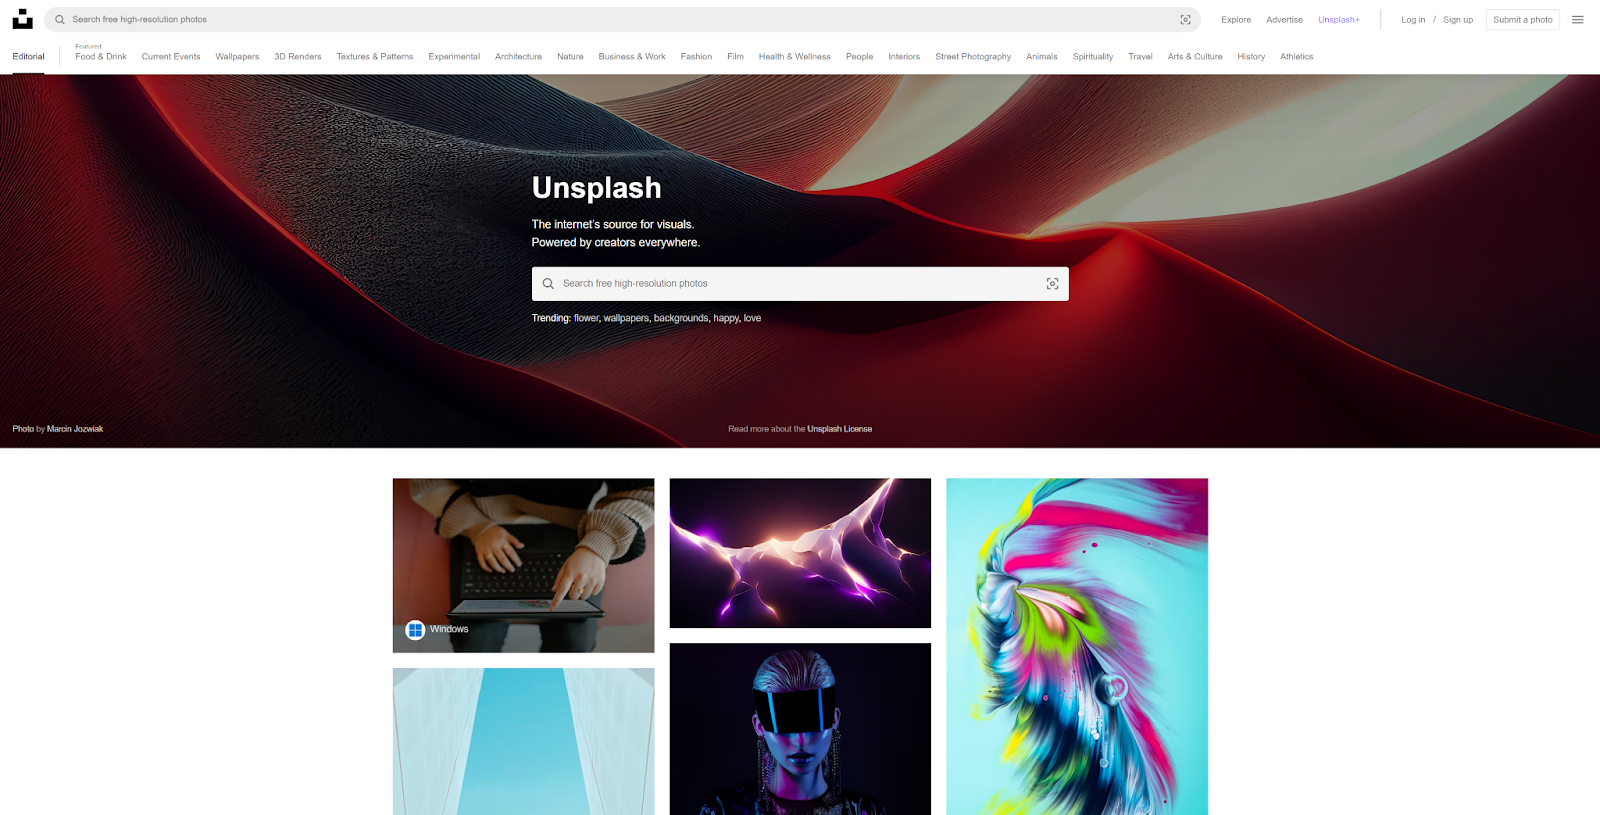 Unsplash's homepage